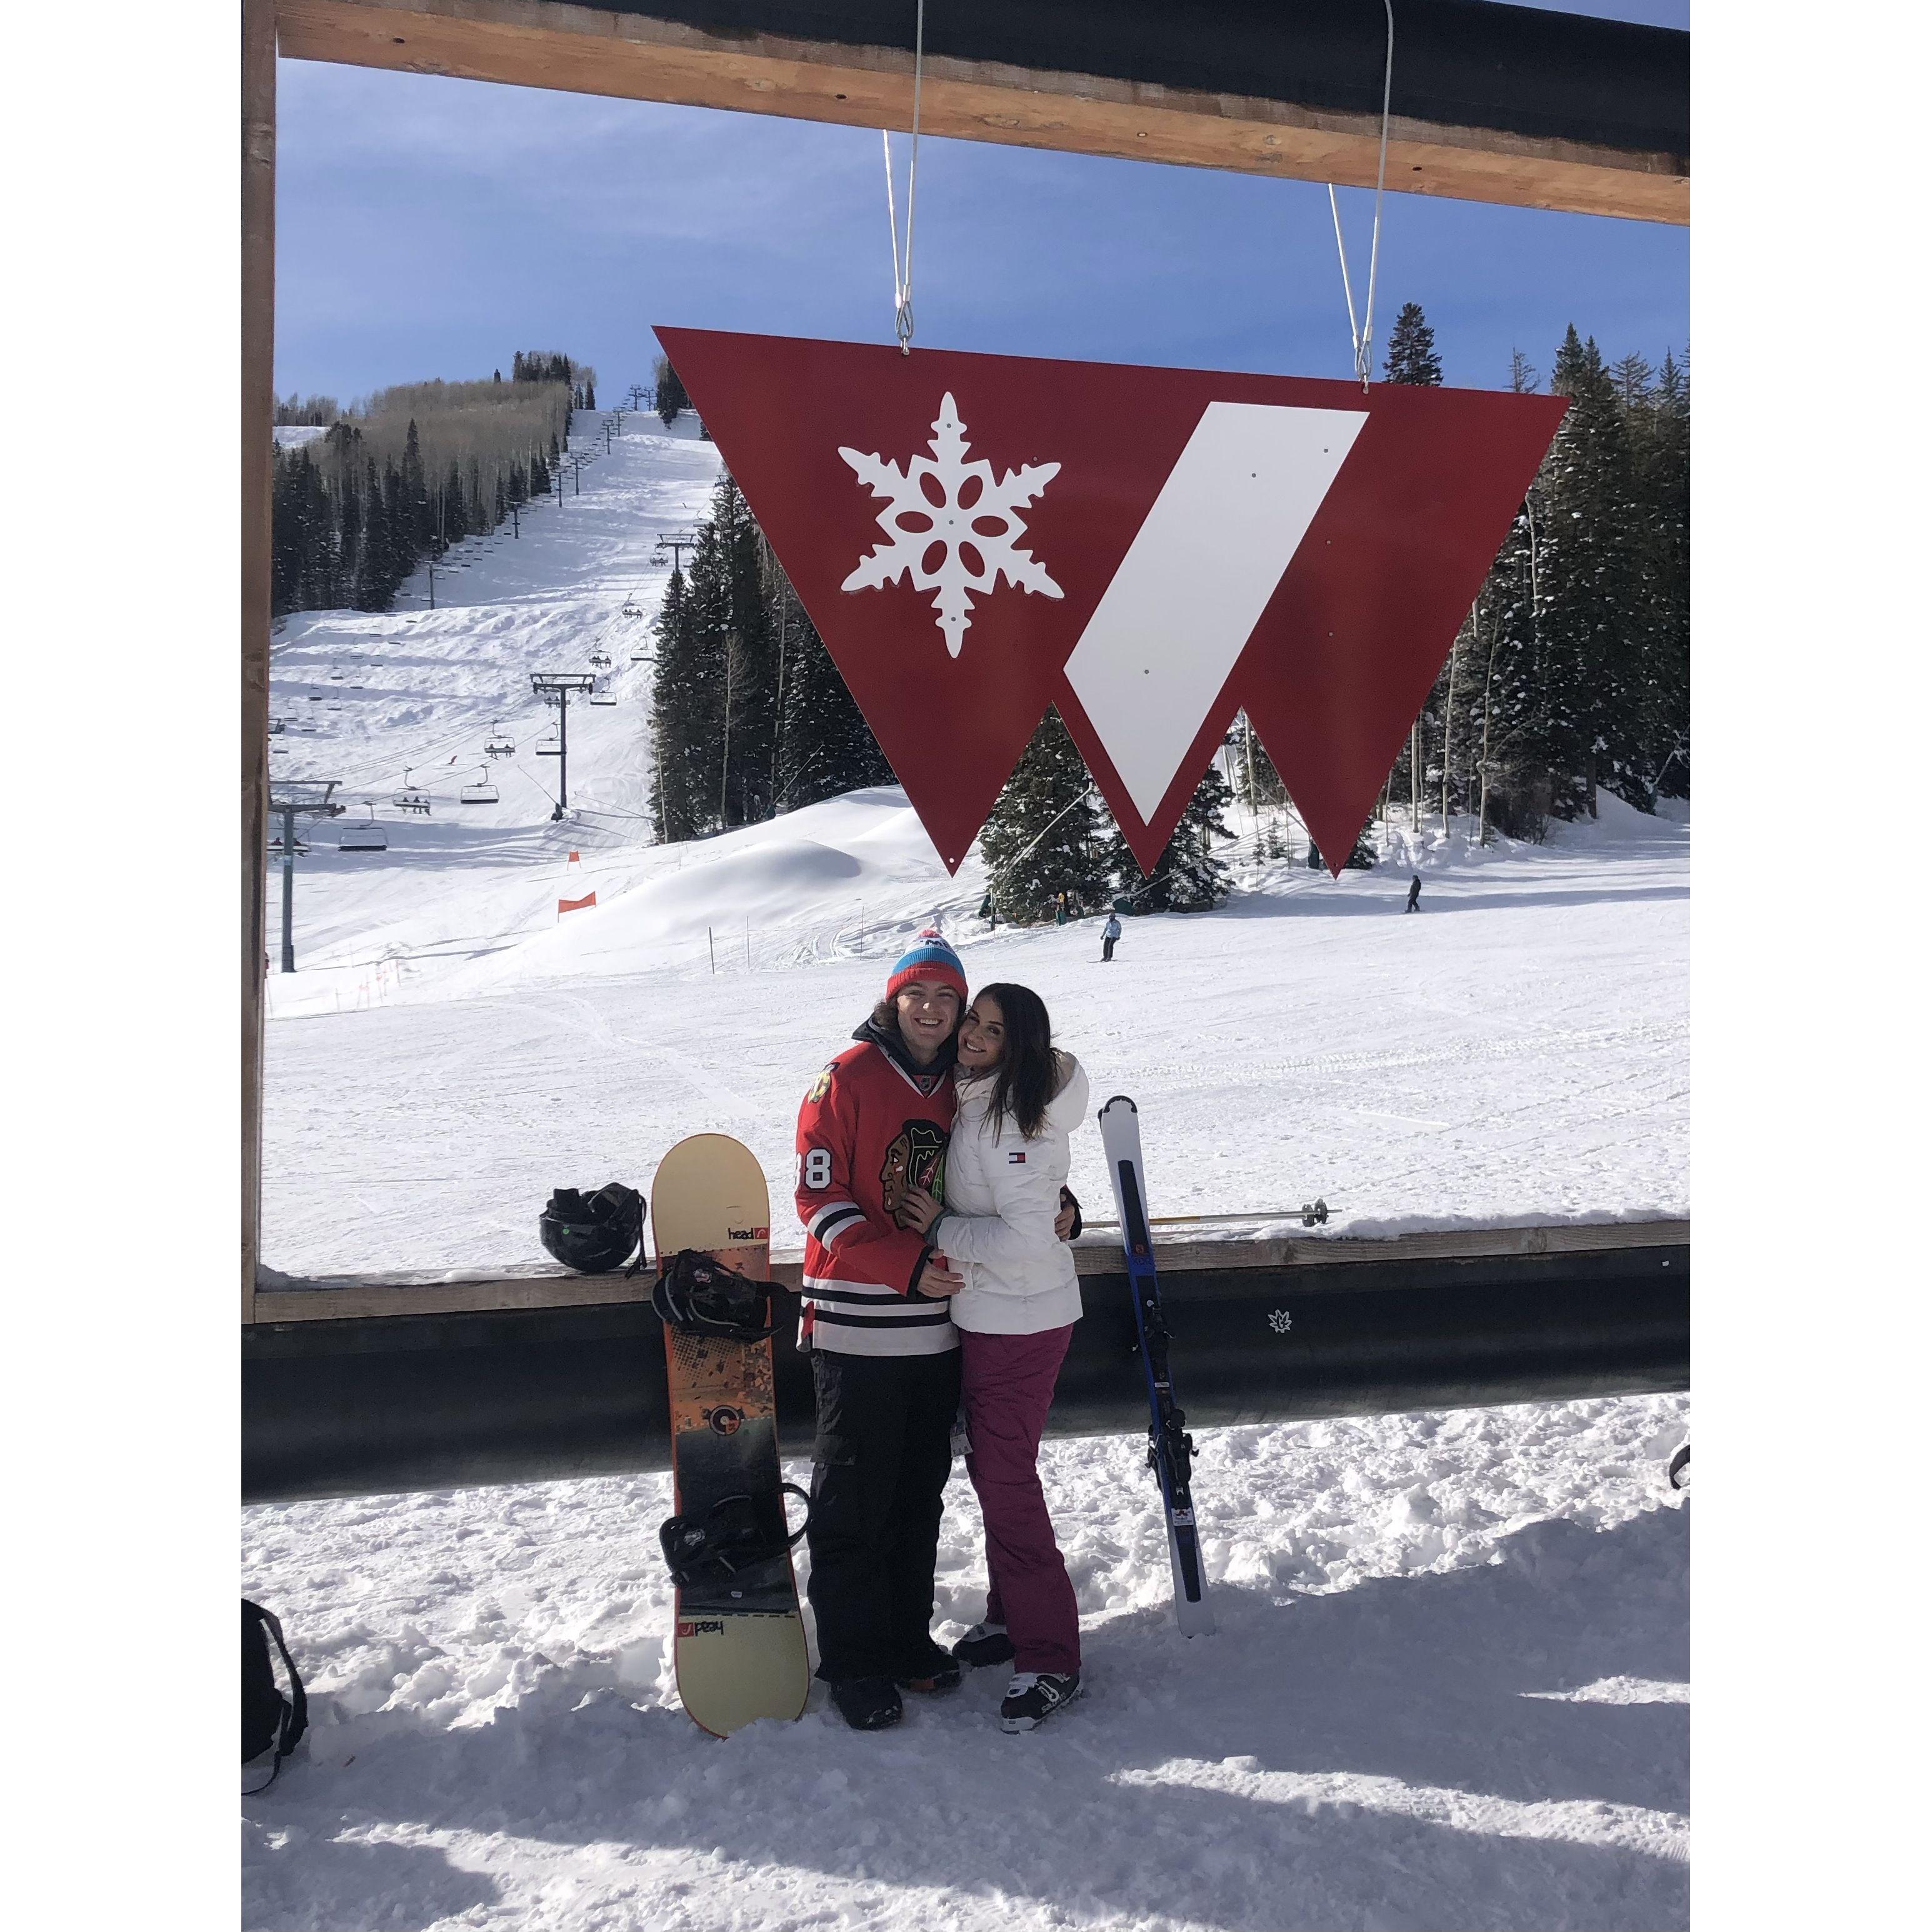 Durango ski trip 2019!